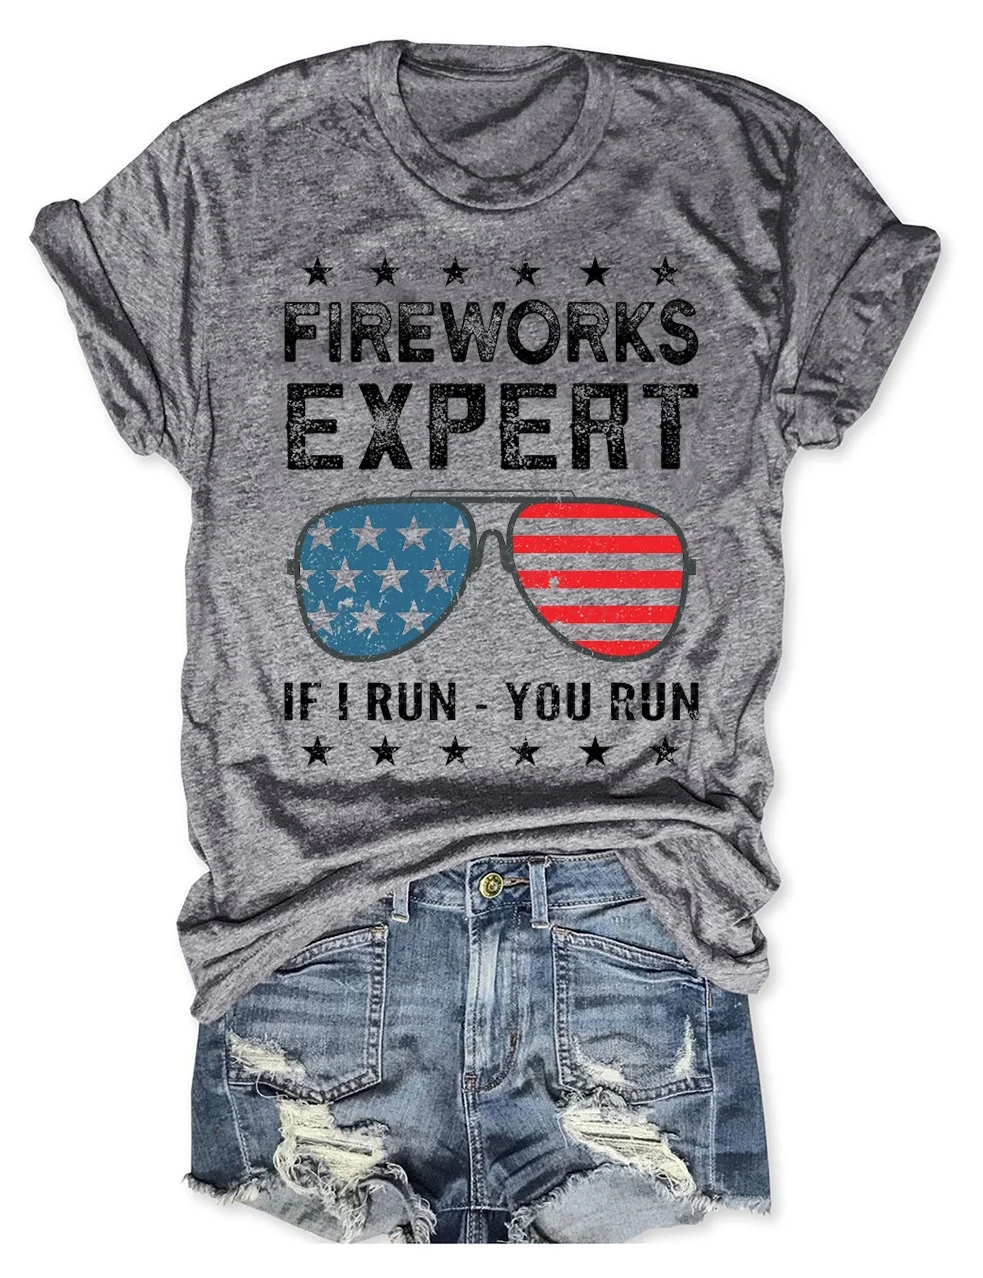 Fireworks Expert If I Run You Run American Flag Sunglasses T-Shirt